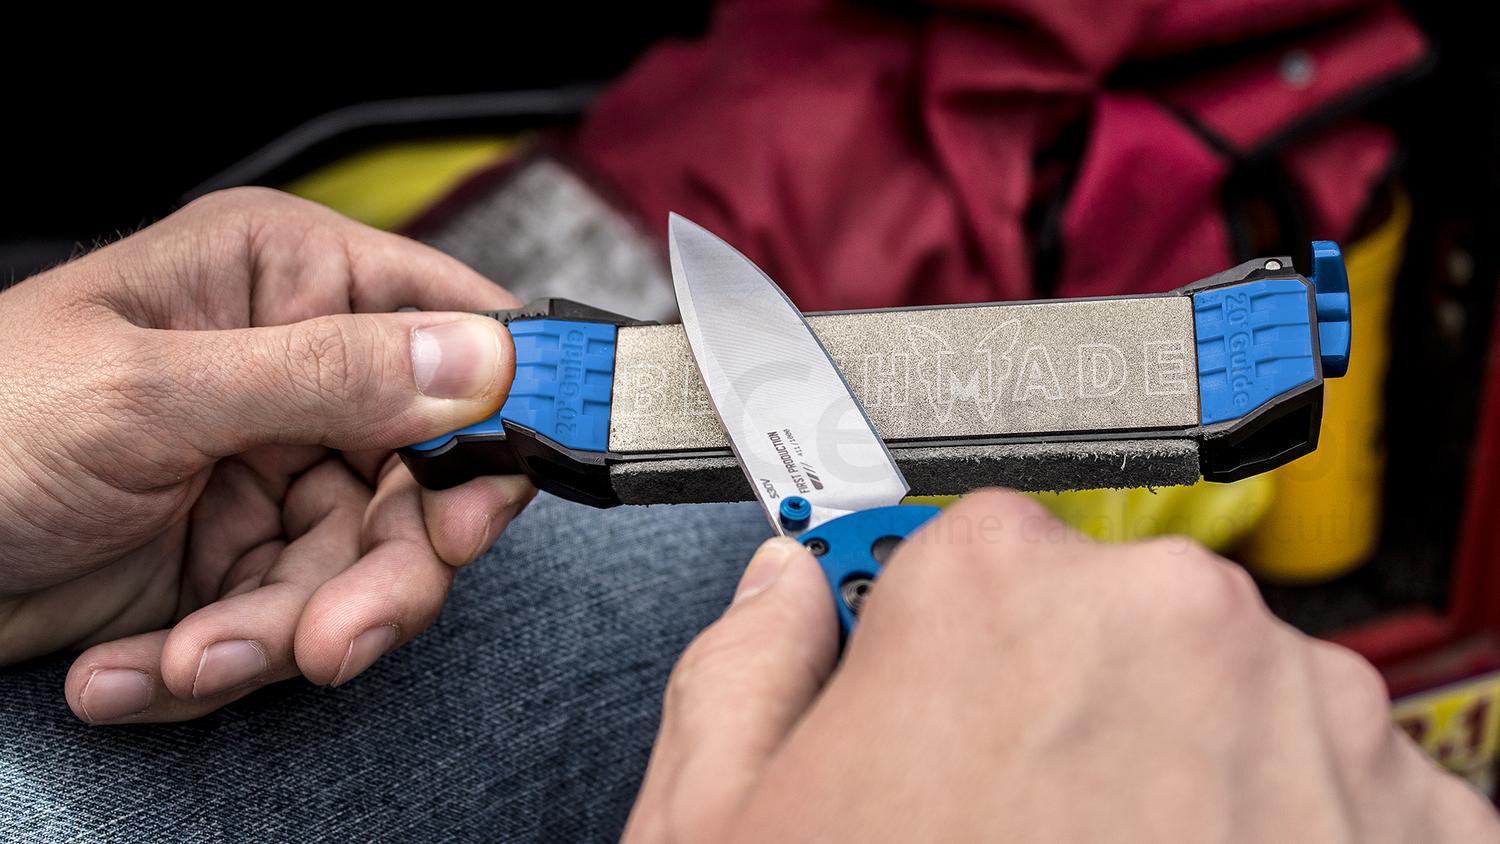 Work Sharp Brand Partner- Benchmade Knife Company - Work Sharp Sharpeners